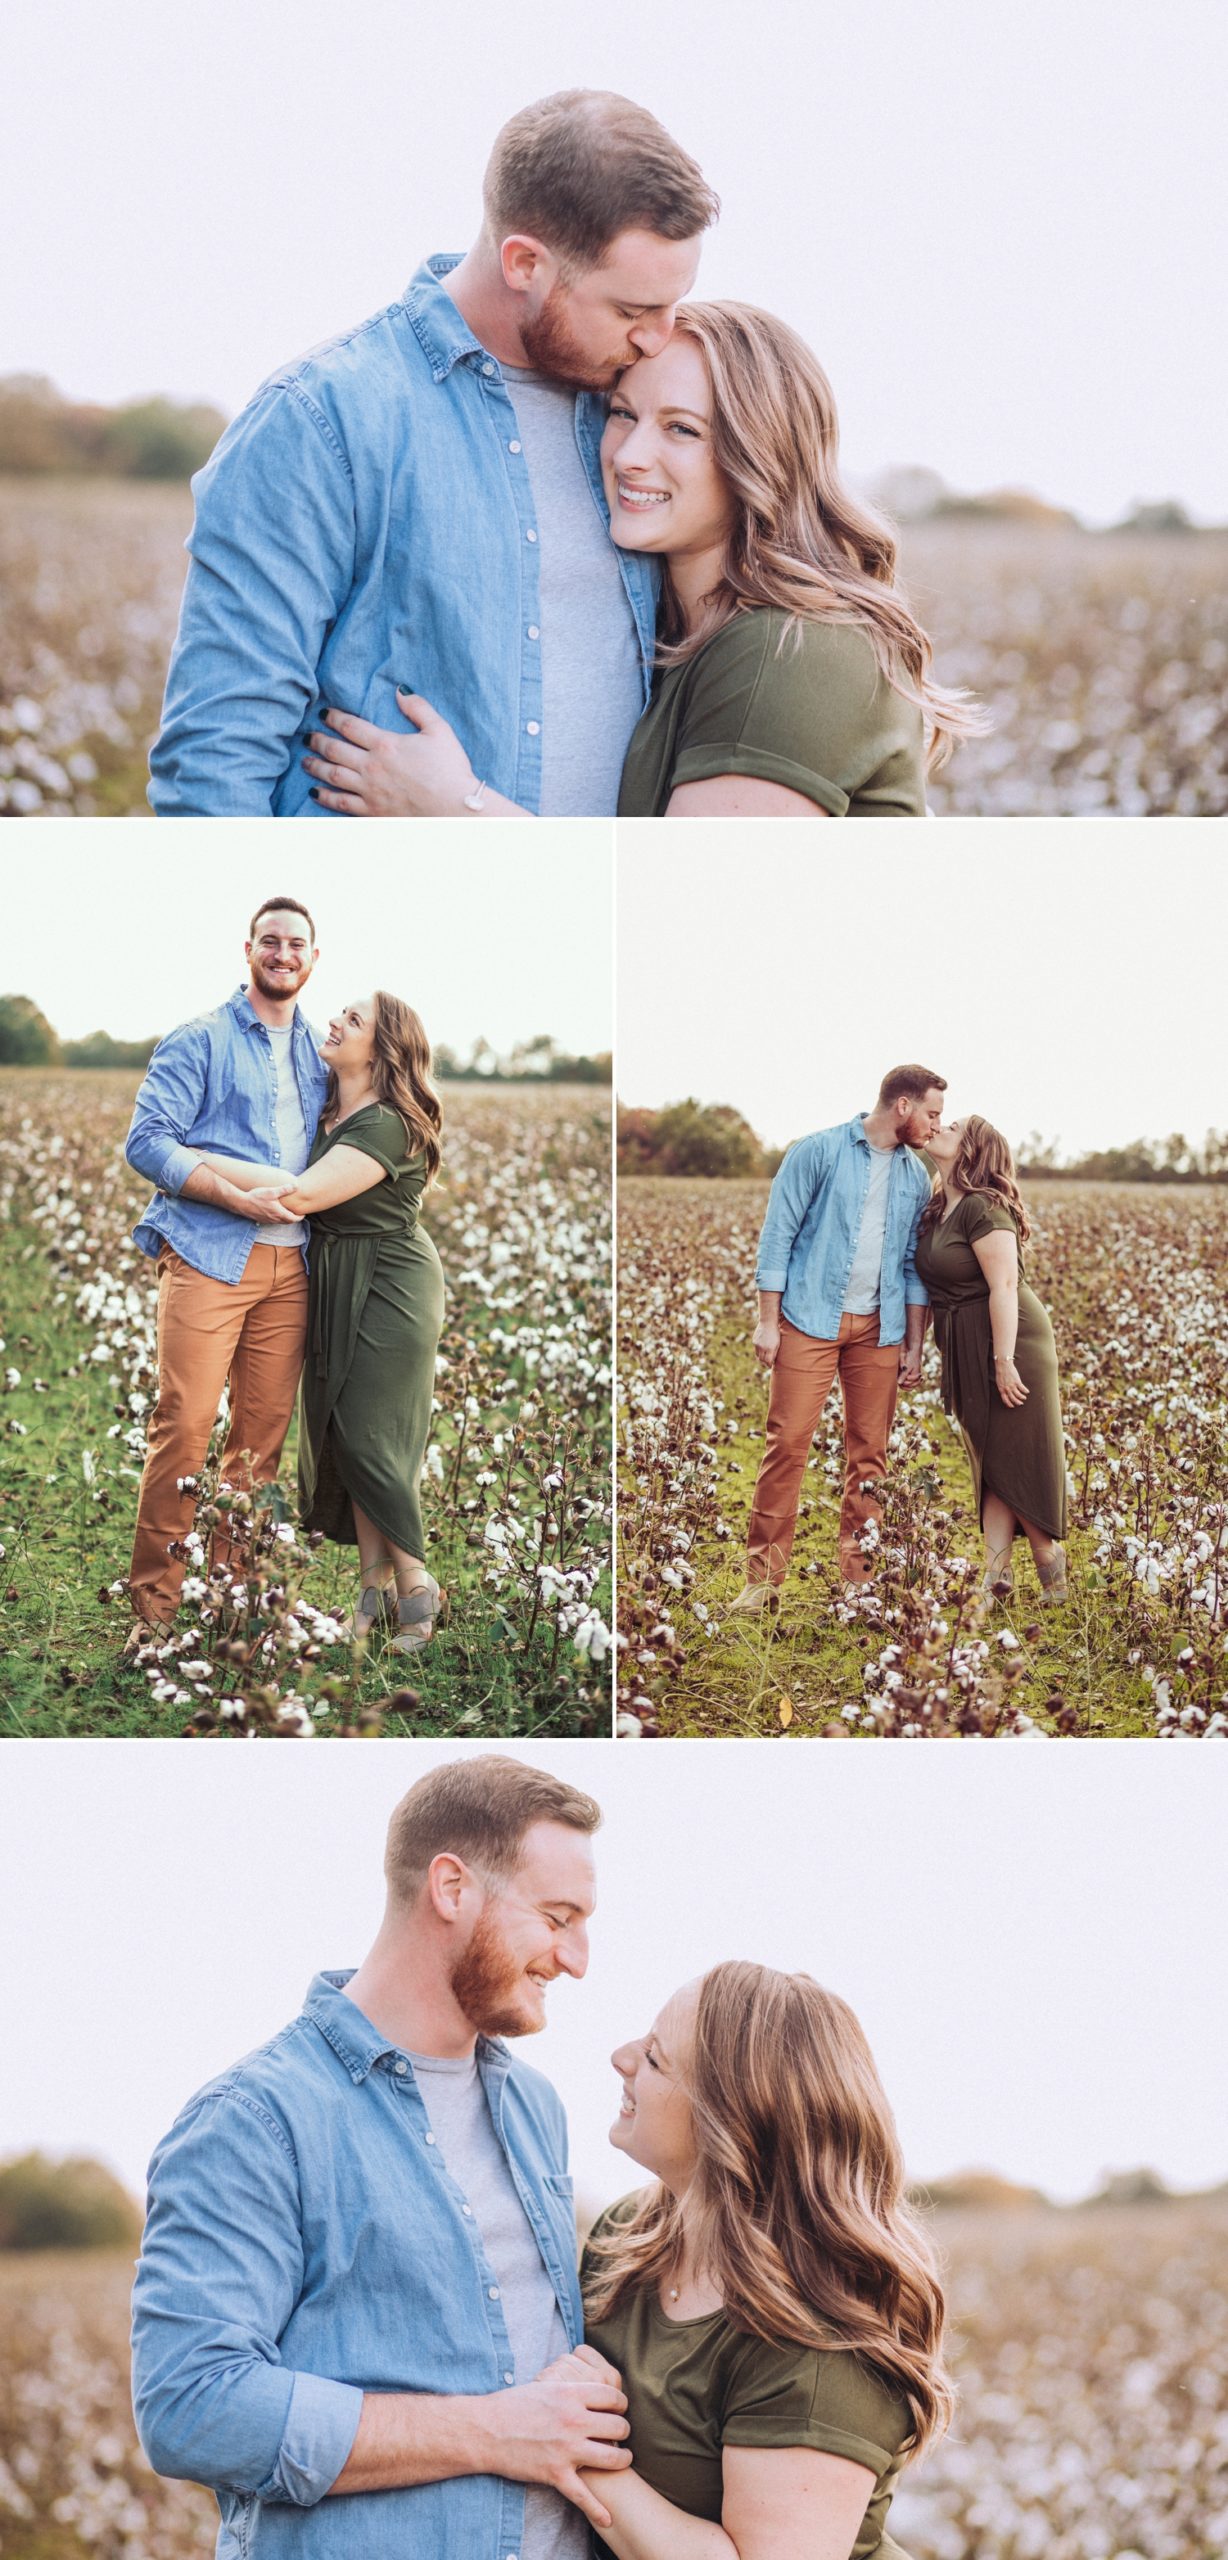 Fall mini photo couple portrait session in Tennessee cotton field